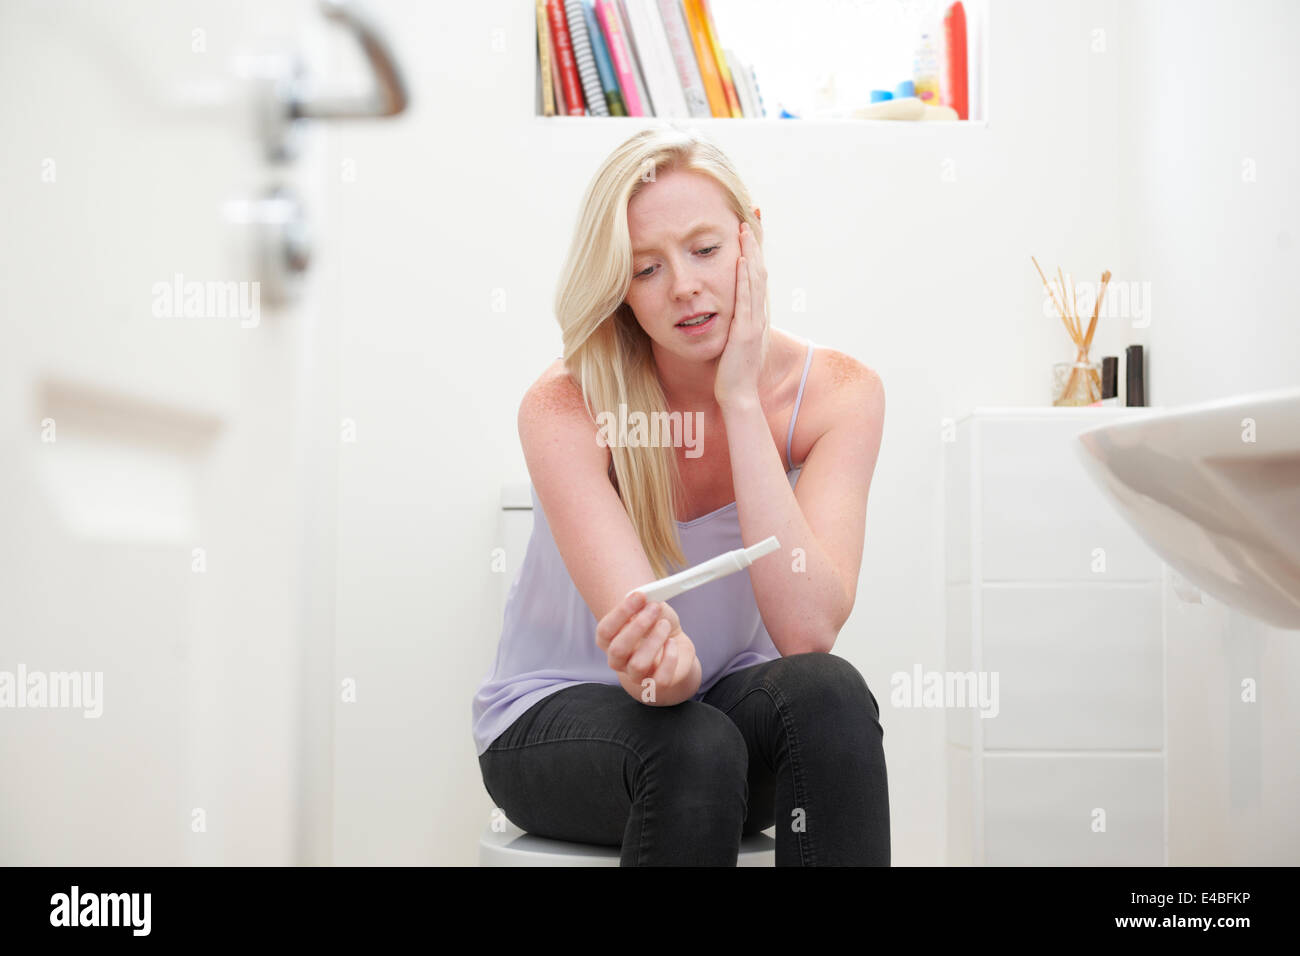 Worried Teenage Girl Sitting In Bathroom With Pregnancy Test Stock Photo